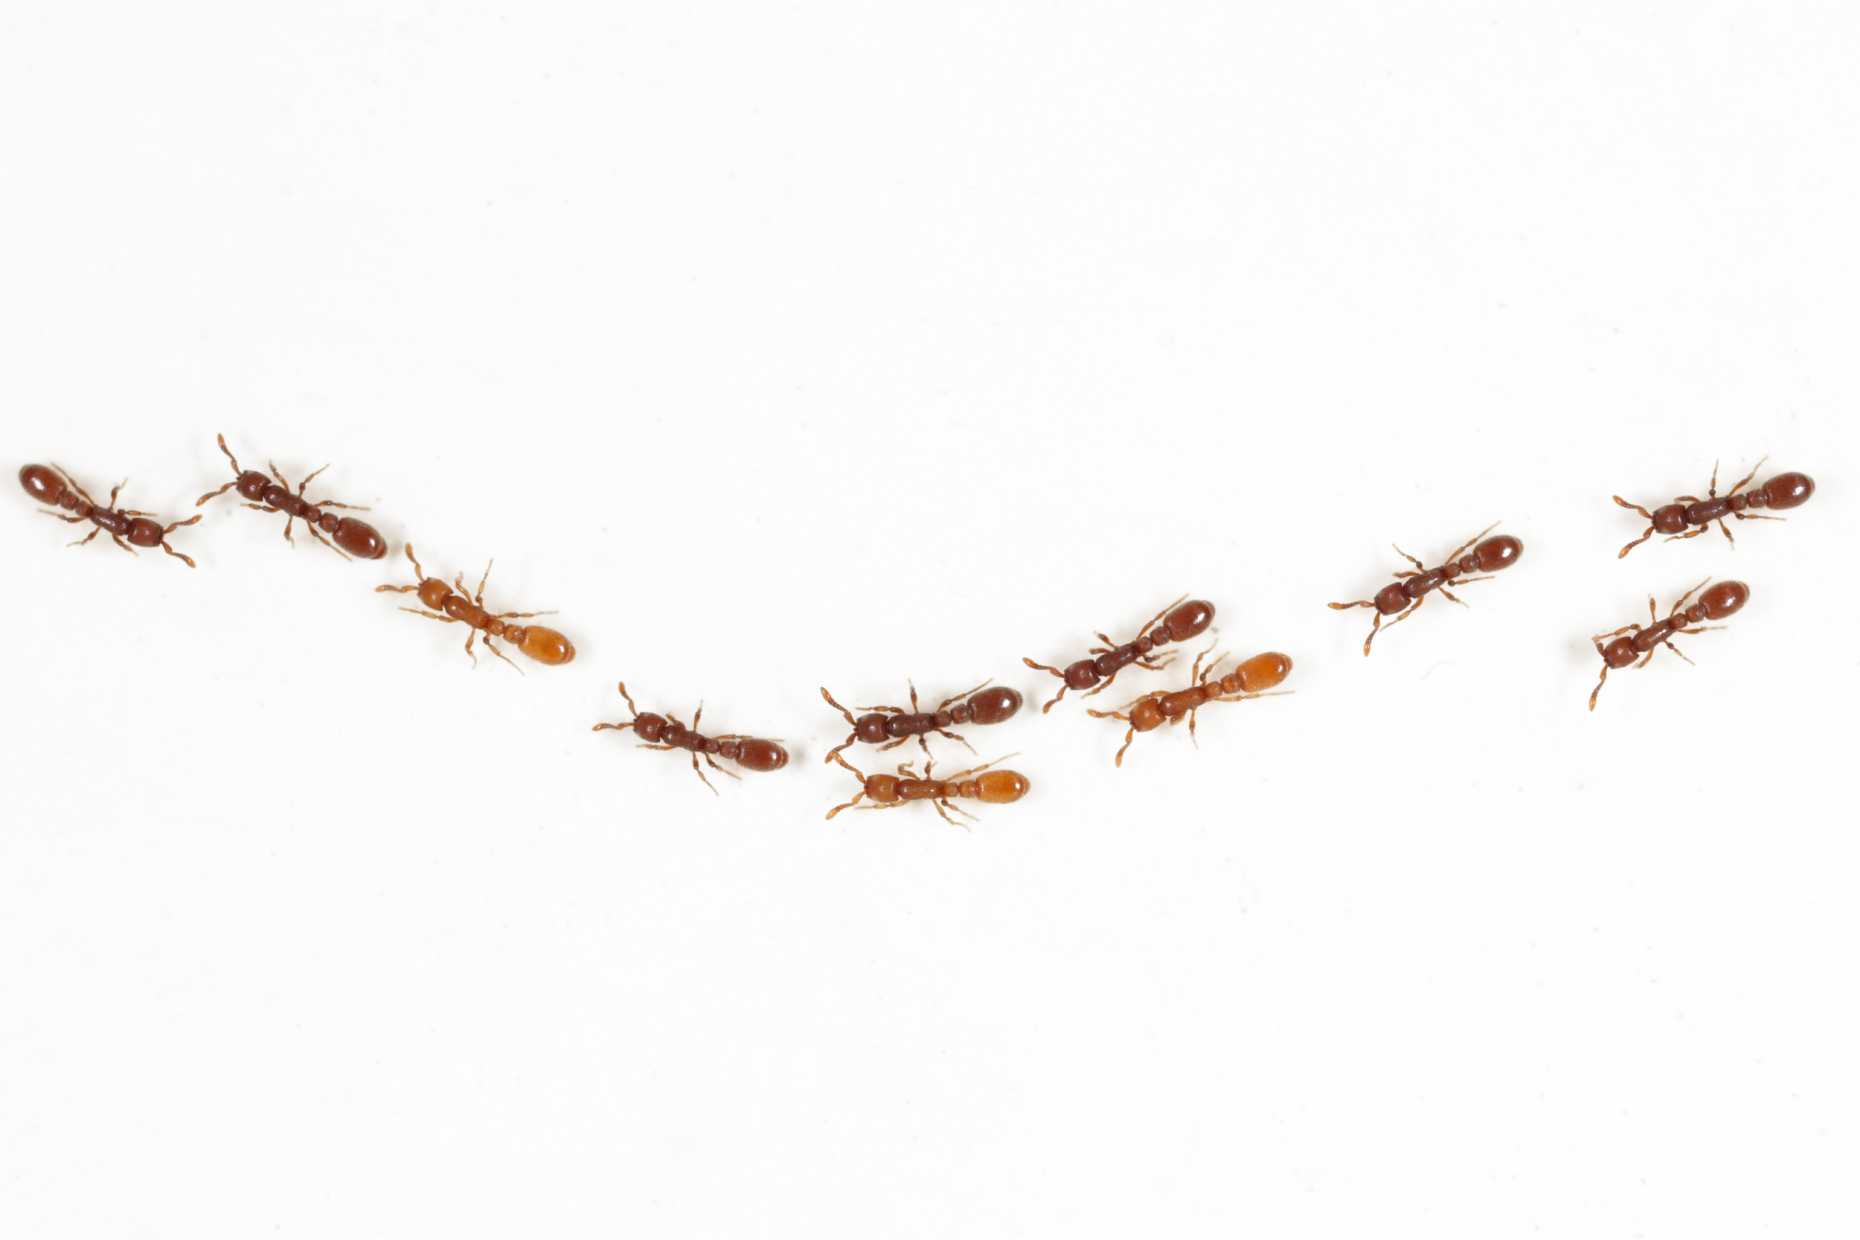 Clonal raider ants